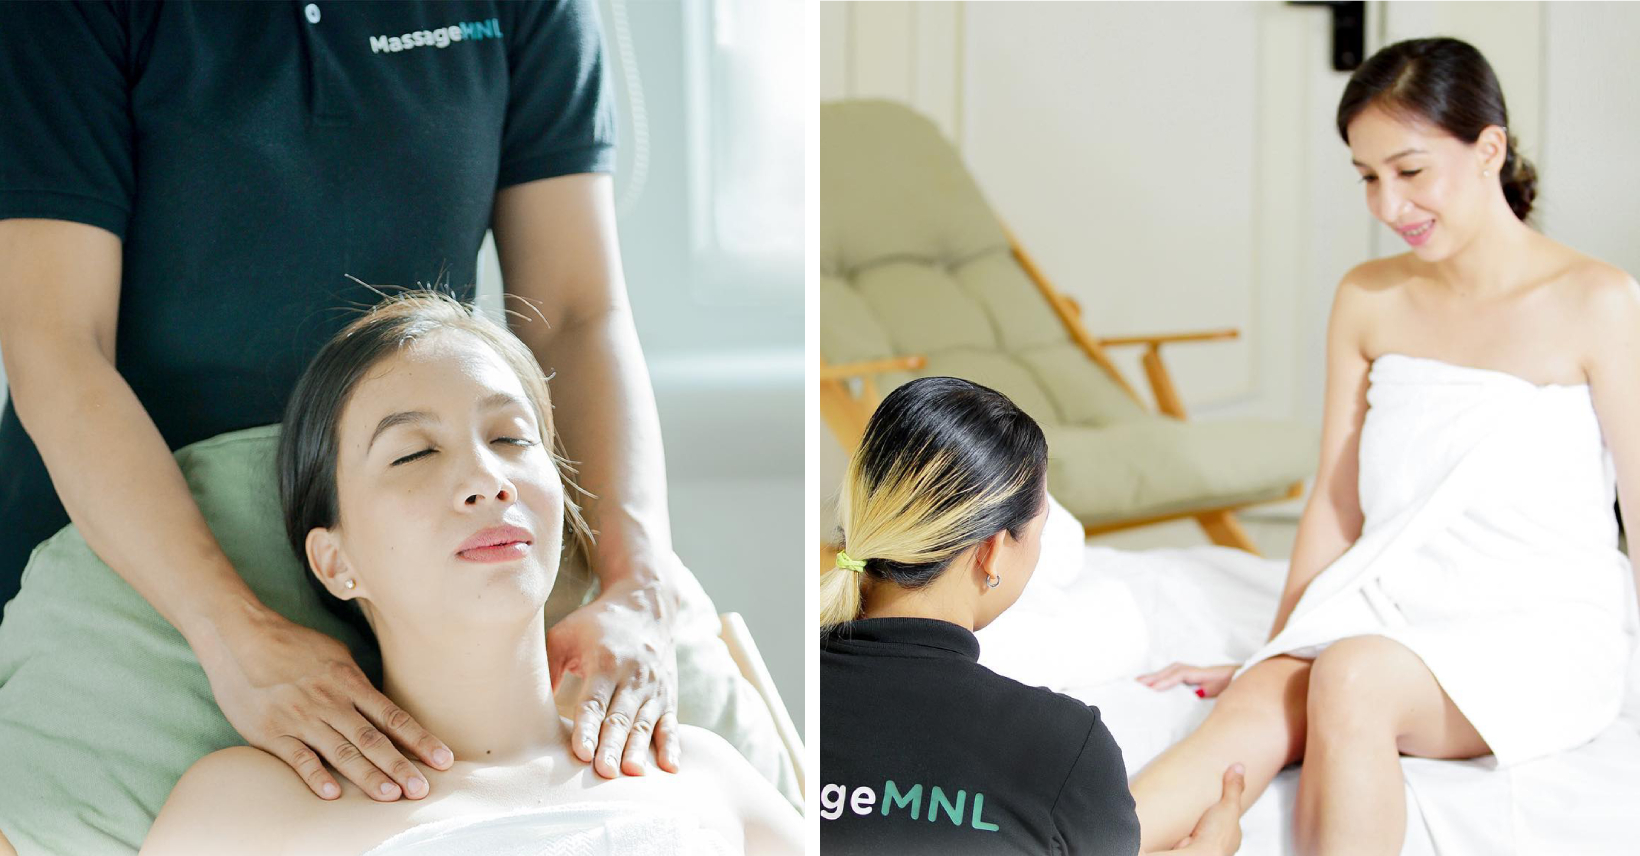 MassageMNL - classic massages